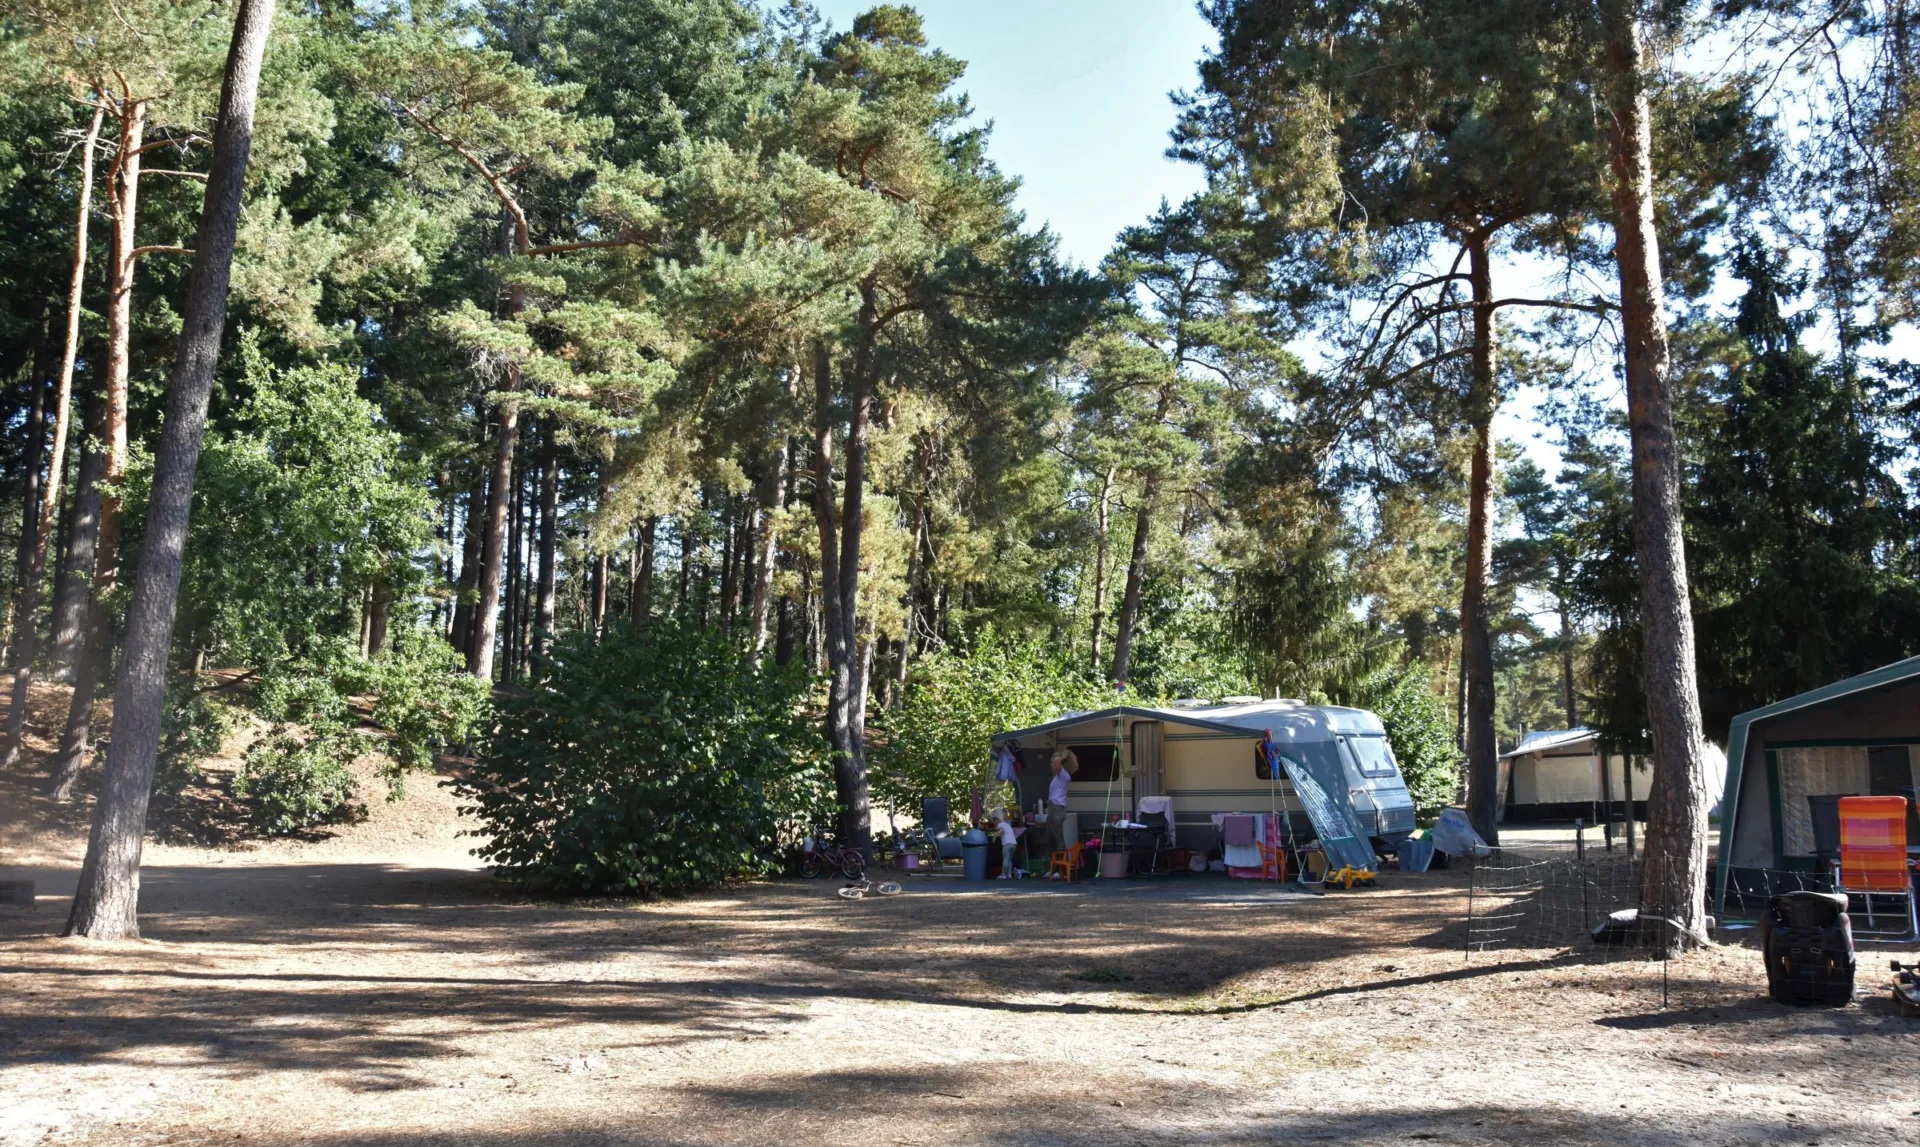 Camping Vierhouten Veluwe Samoza Buizerd 14